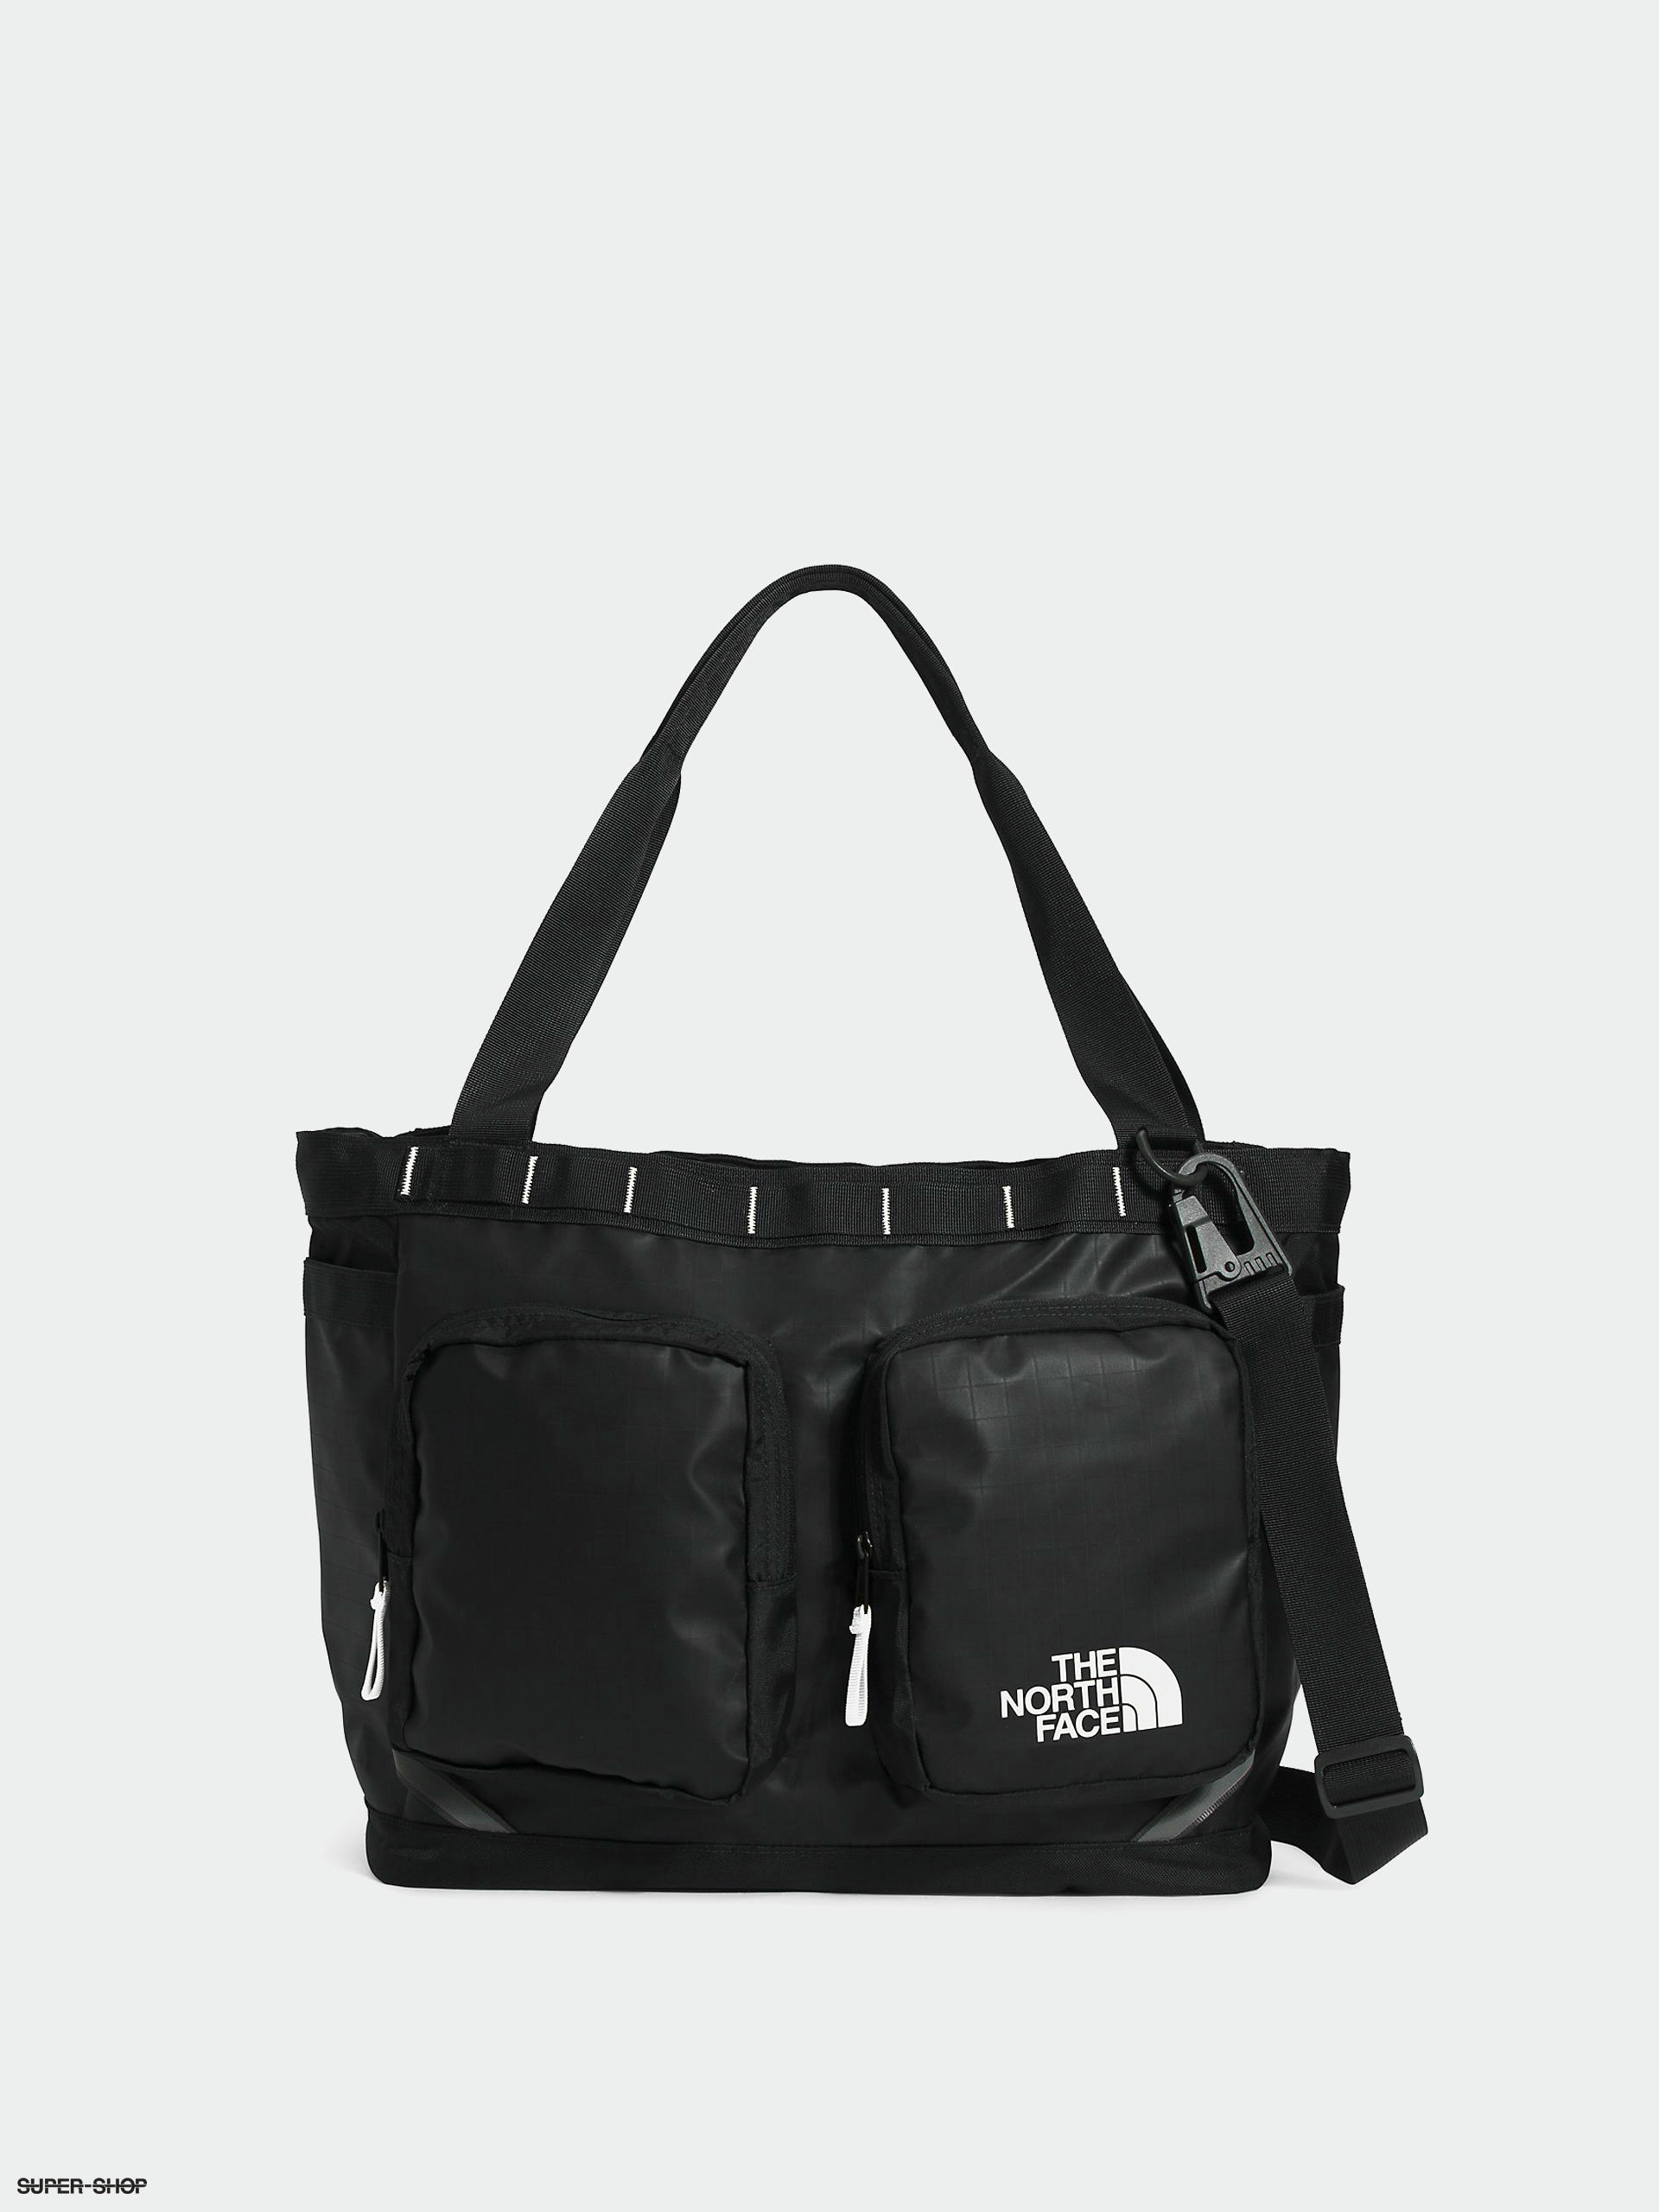 The North Face Terra Metro Bag | Bags, North face bag, Shoulder bag